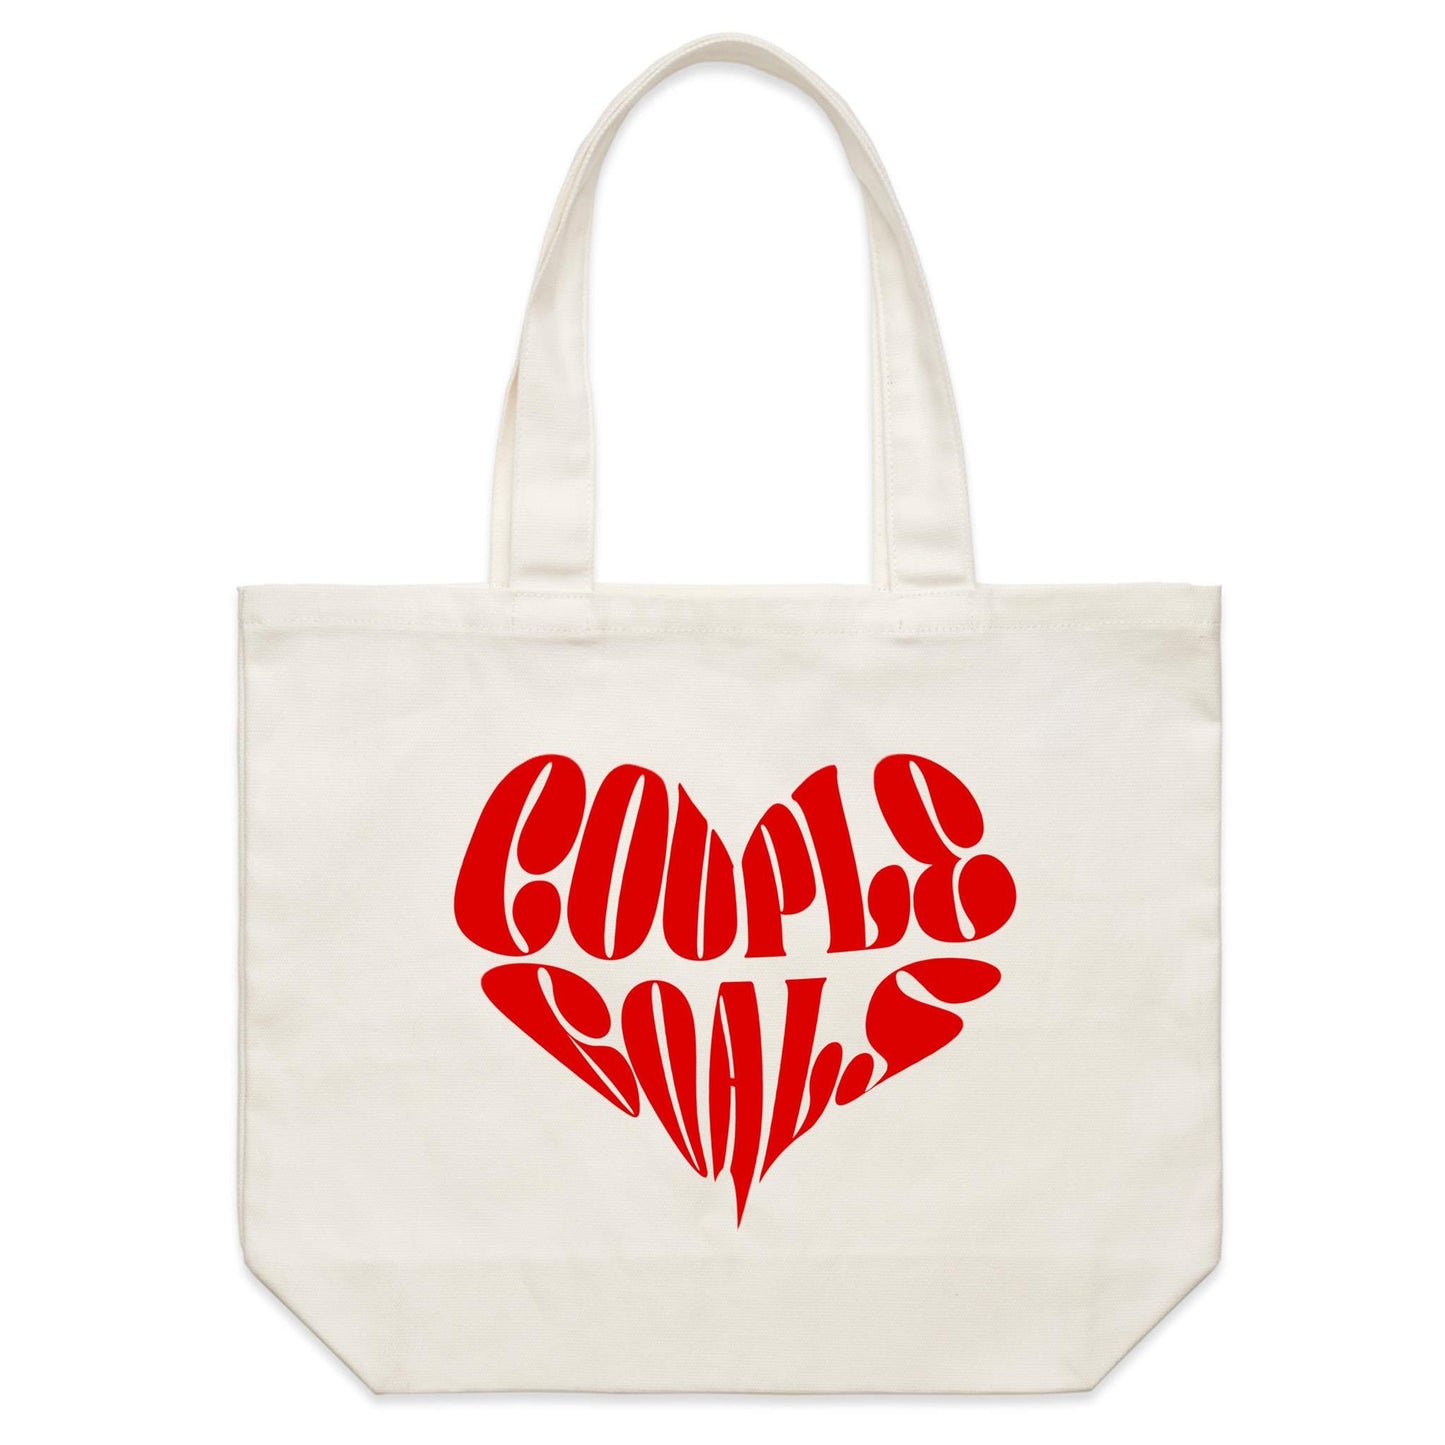 Couple Goals Heart - Tote Bag